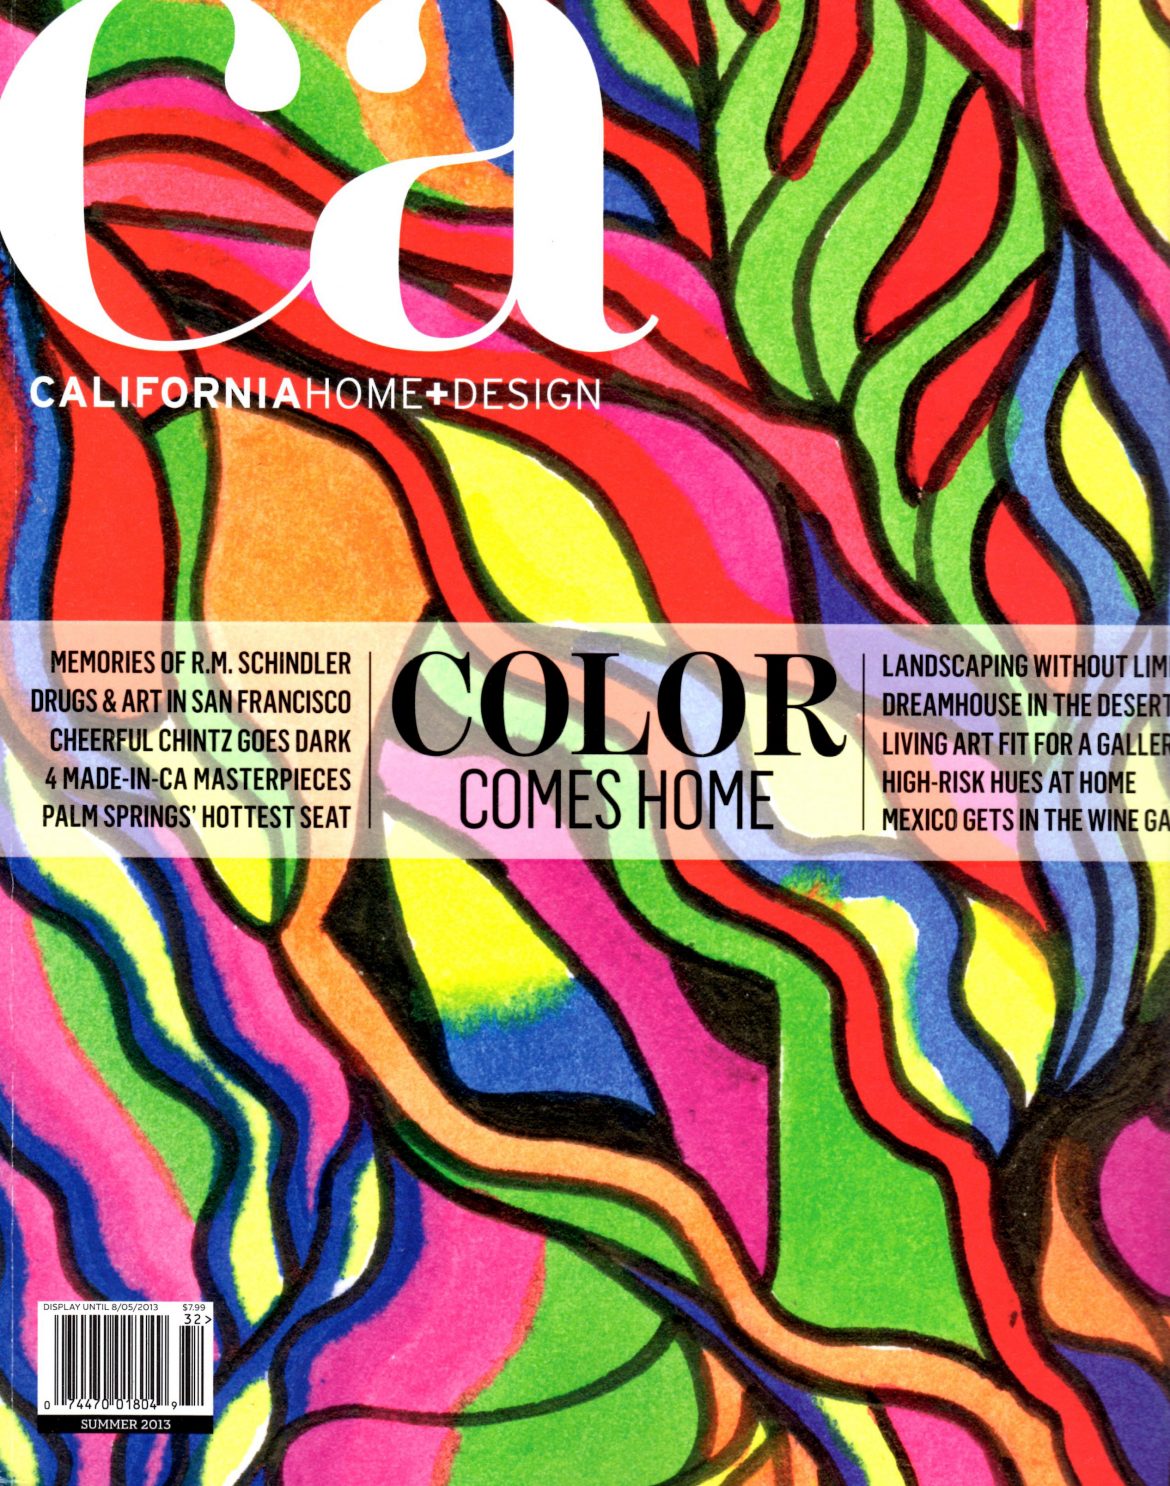 "California Home & Design cover 2013"